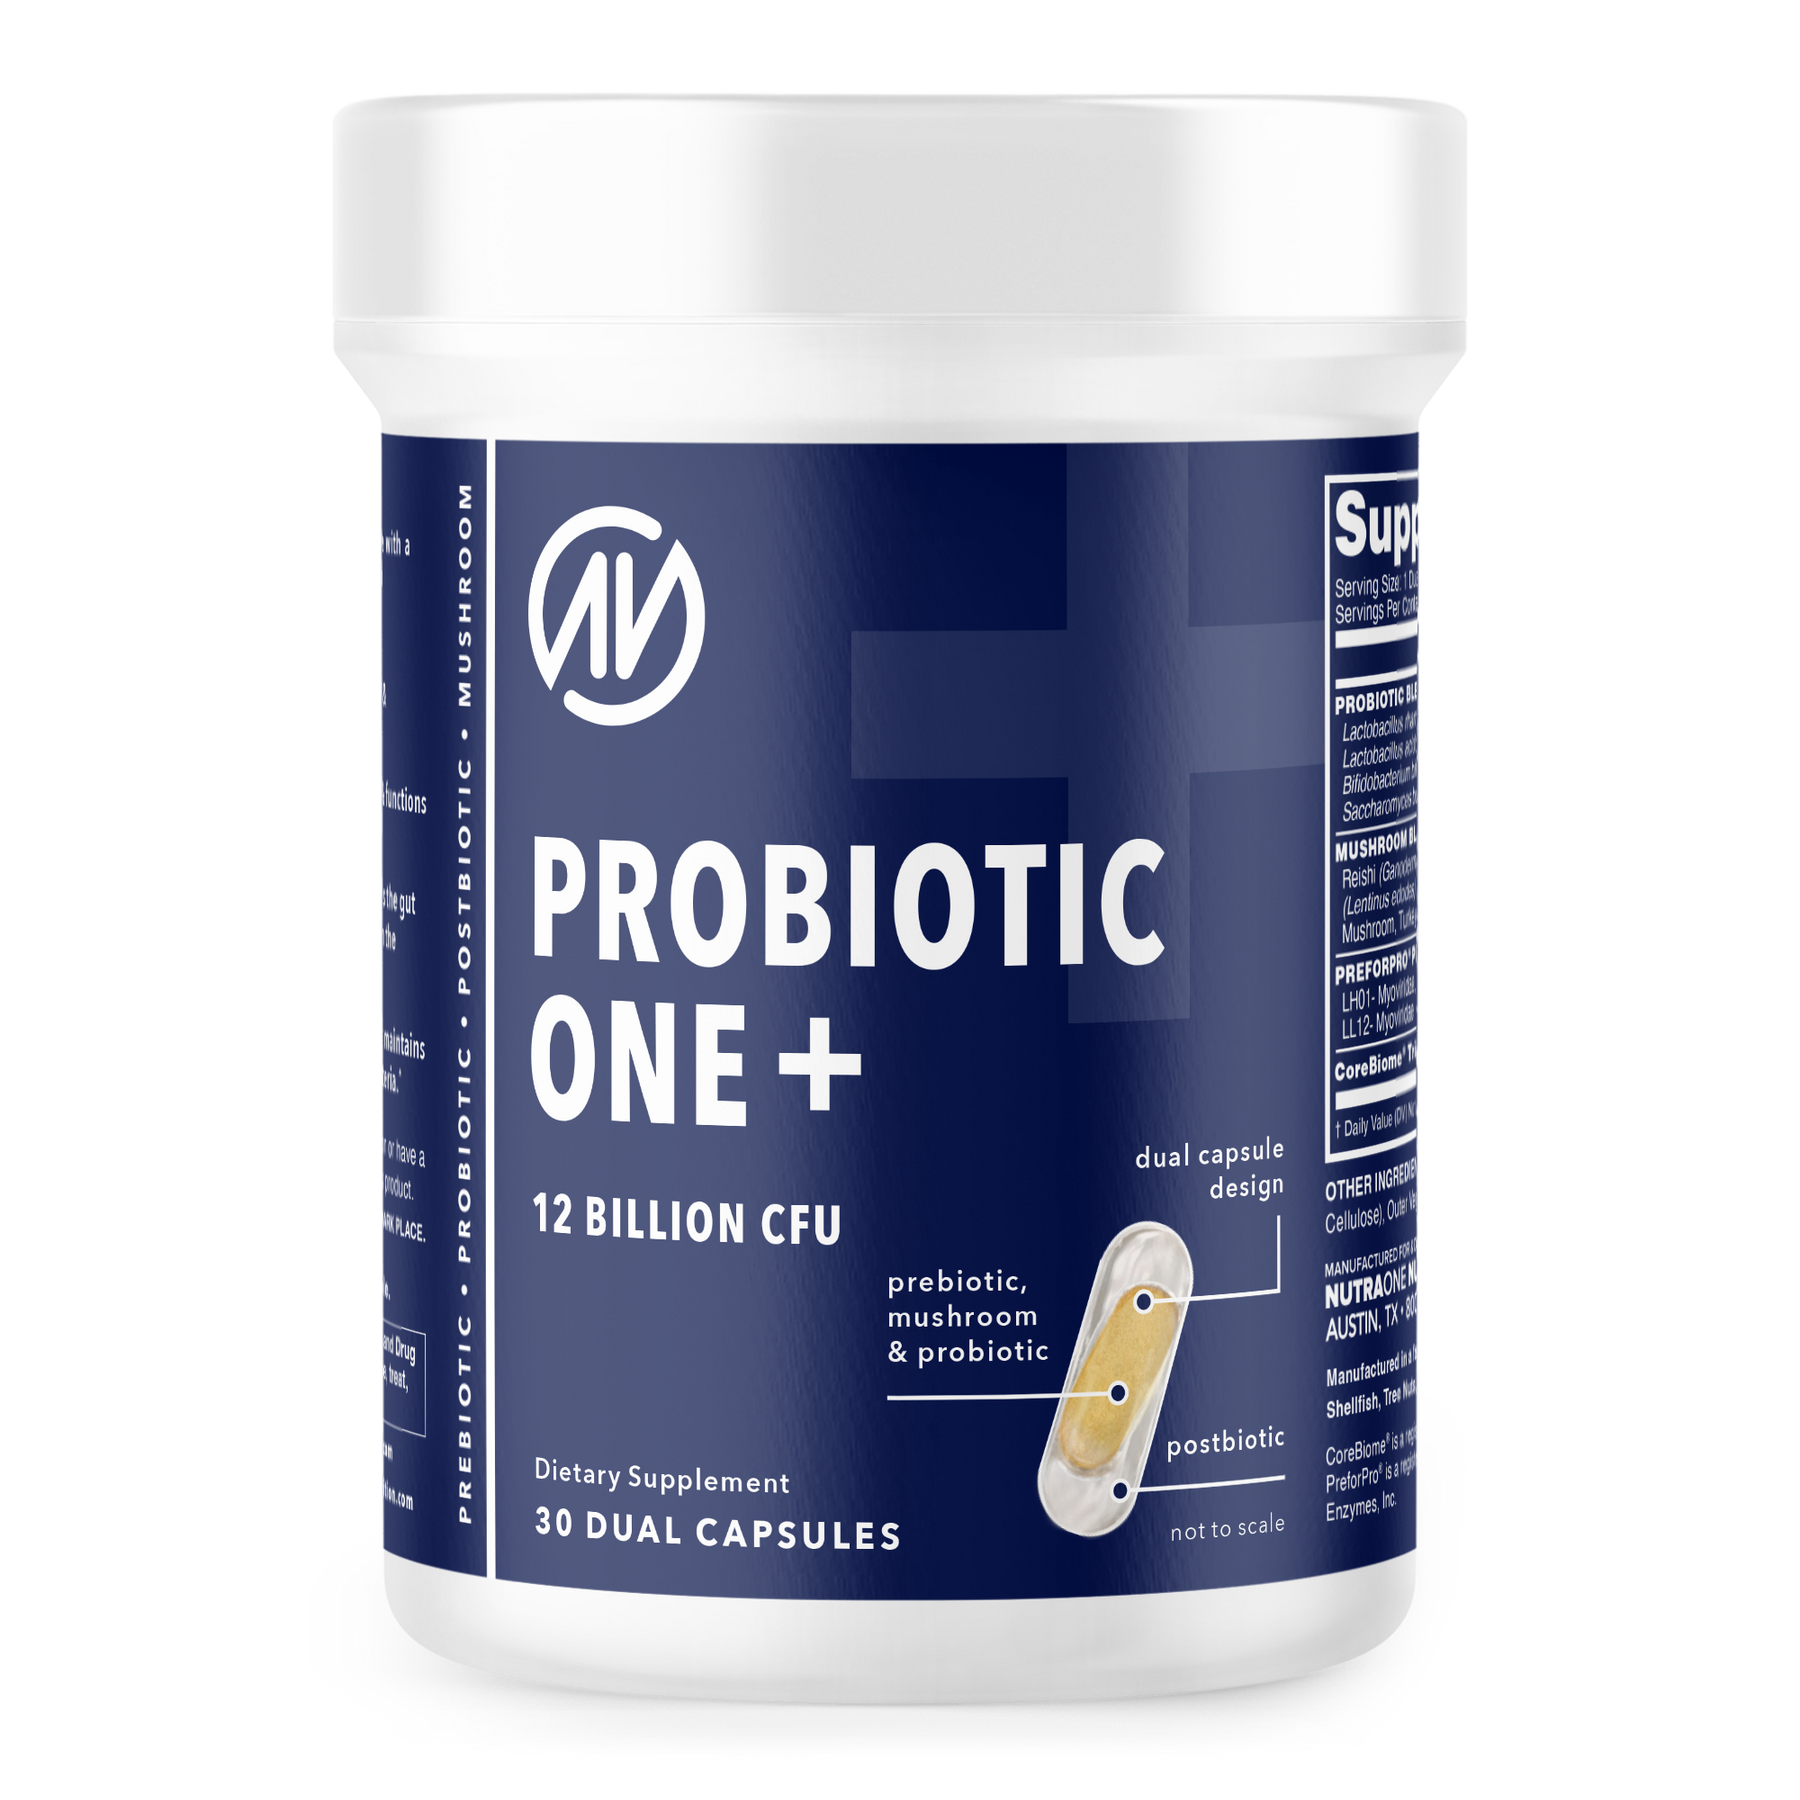 Probiotic One+ probiotic by nutraone